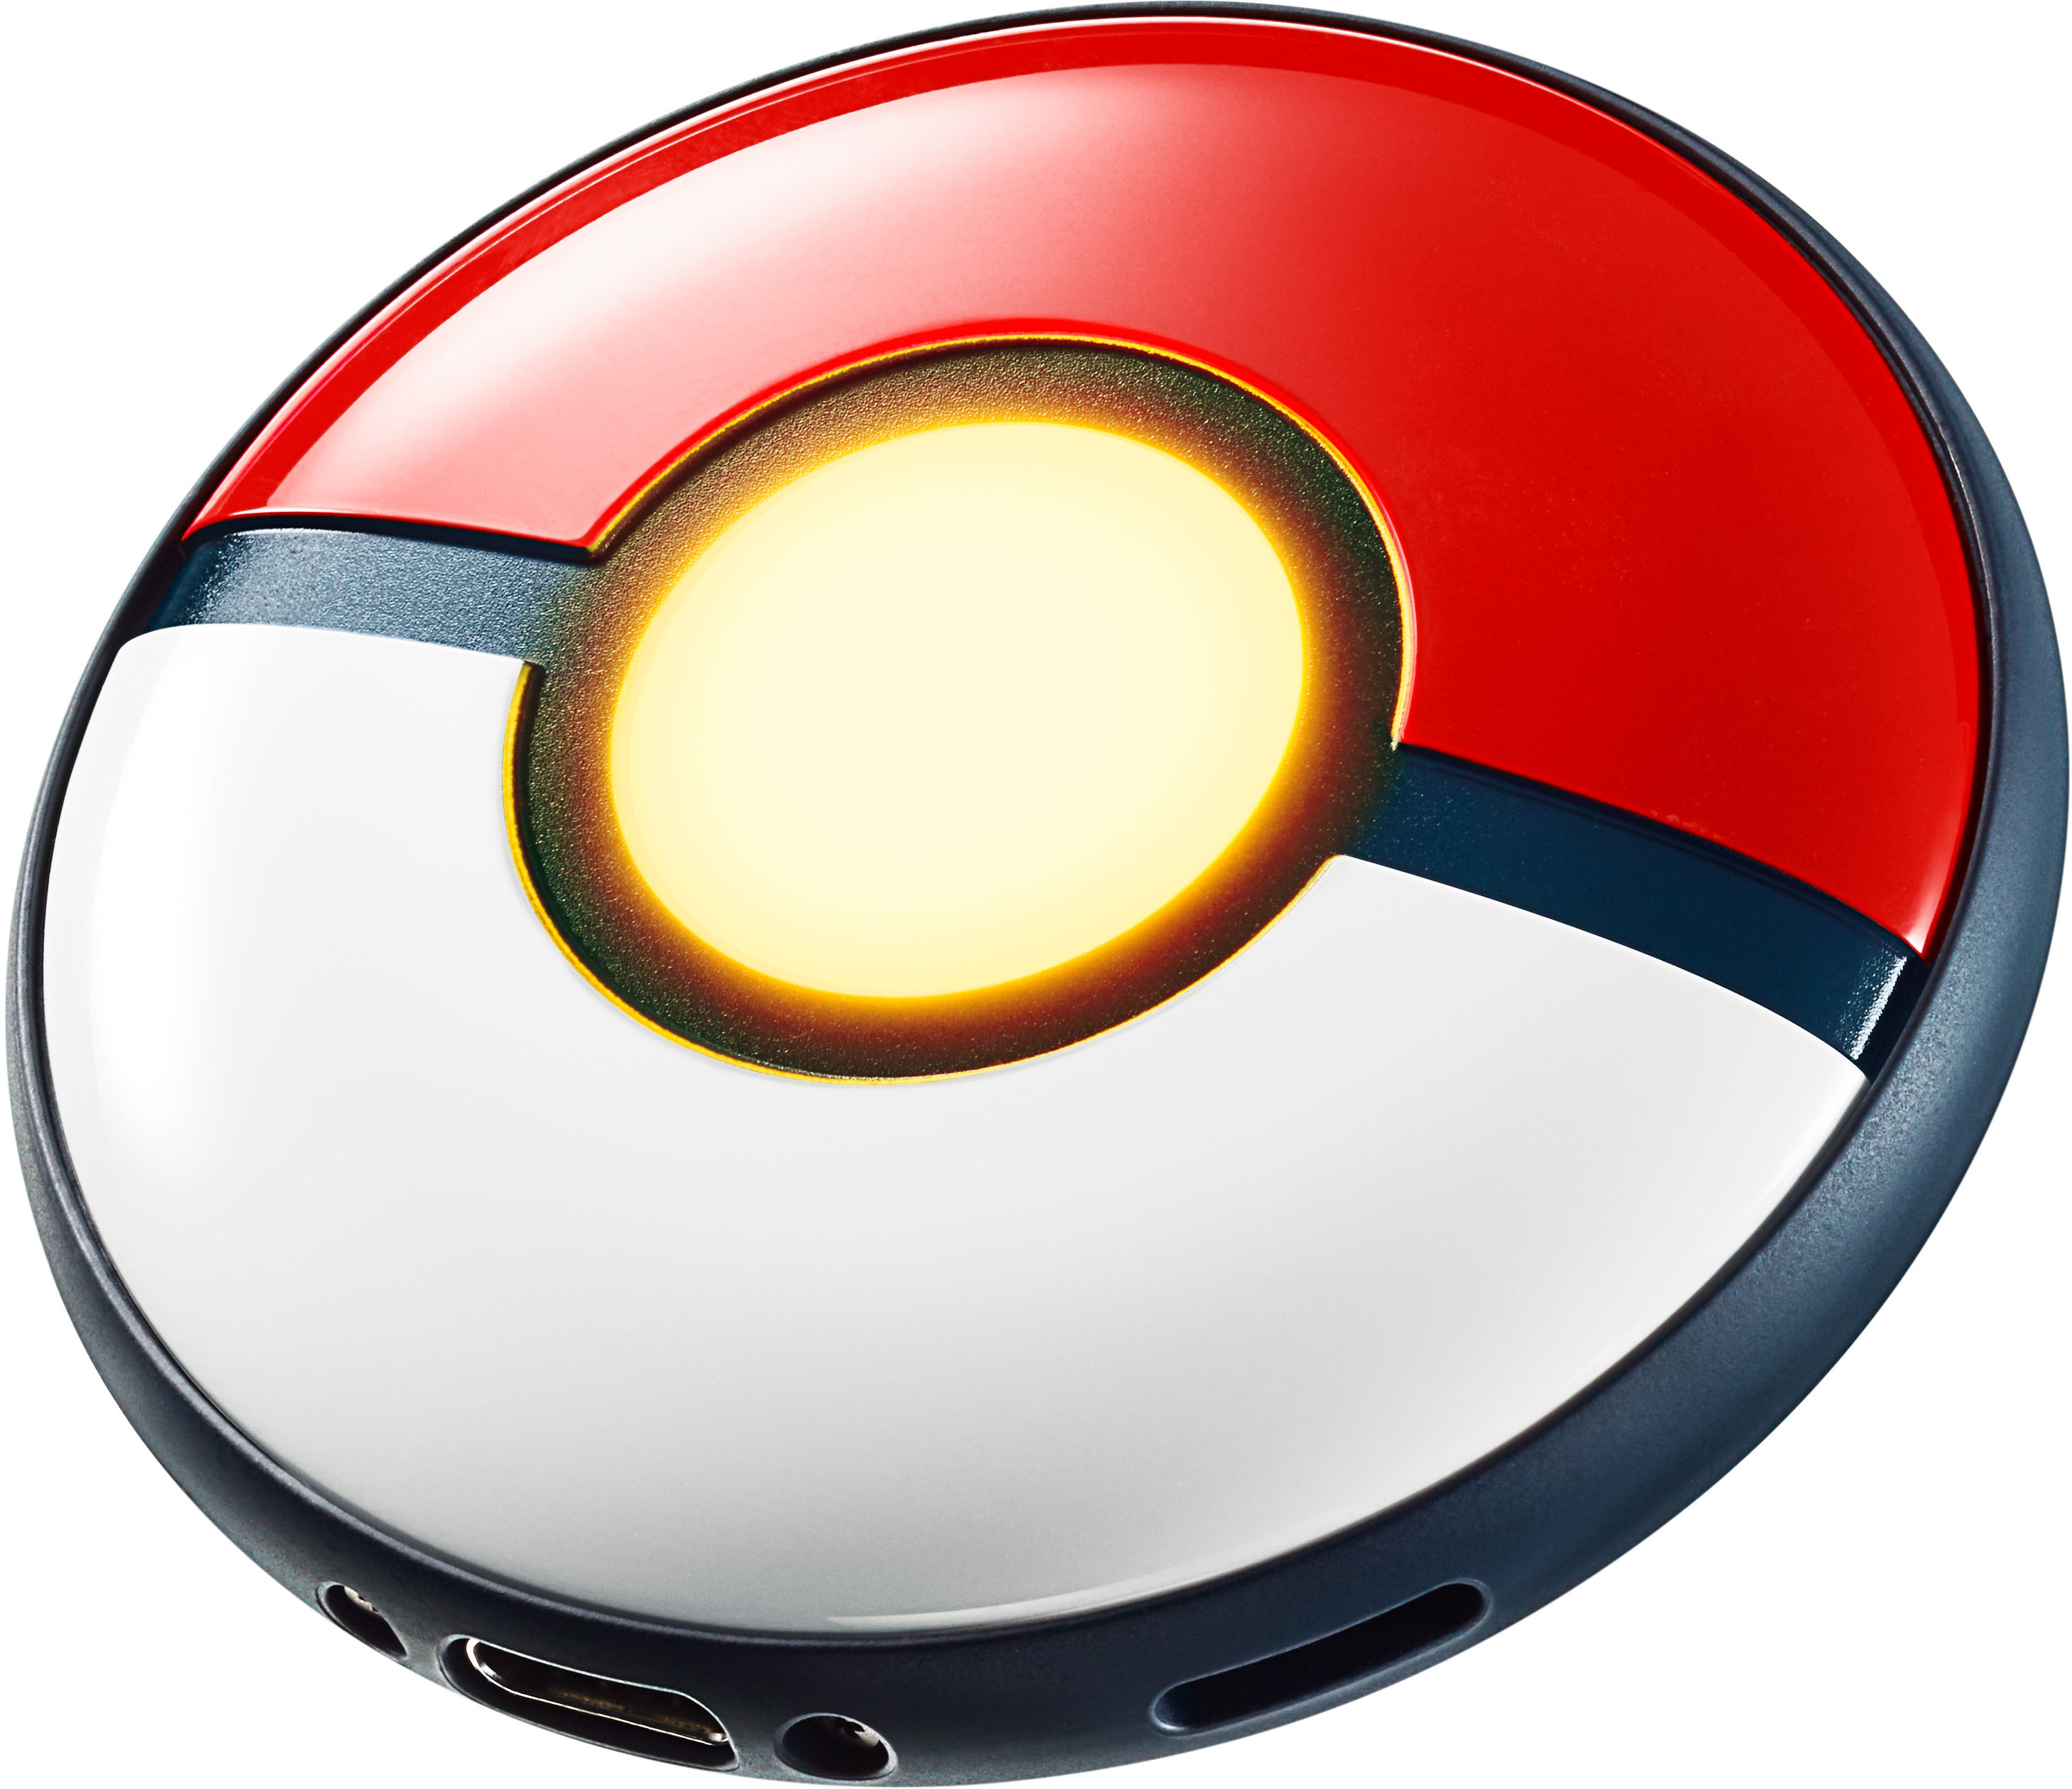 Pokemon Go - Three promo codes for free Rewards (Greatballs, Pokeballs,  Berries, Ultraballs) - DigiStatement